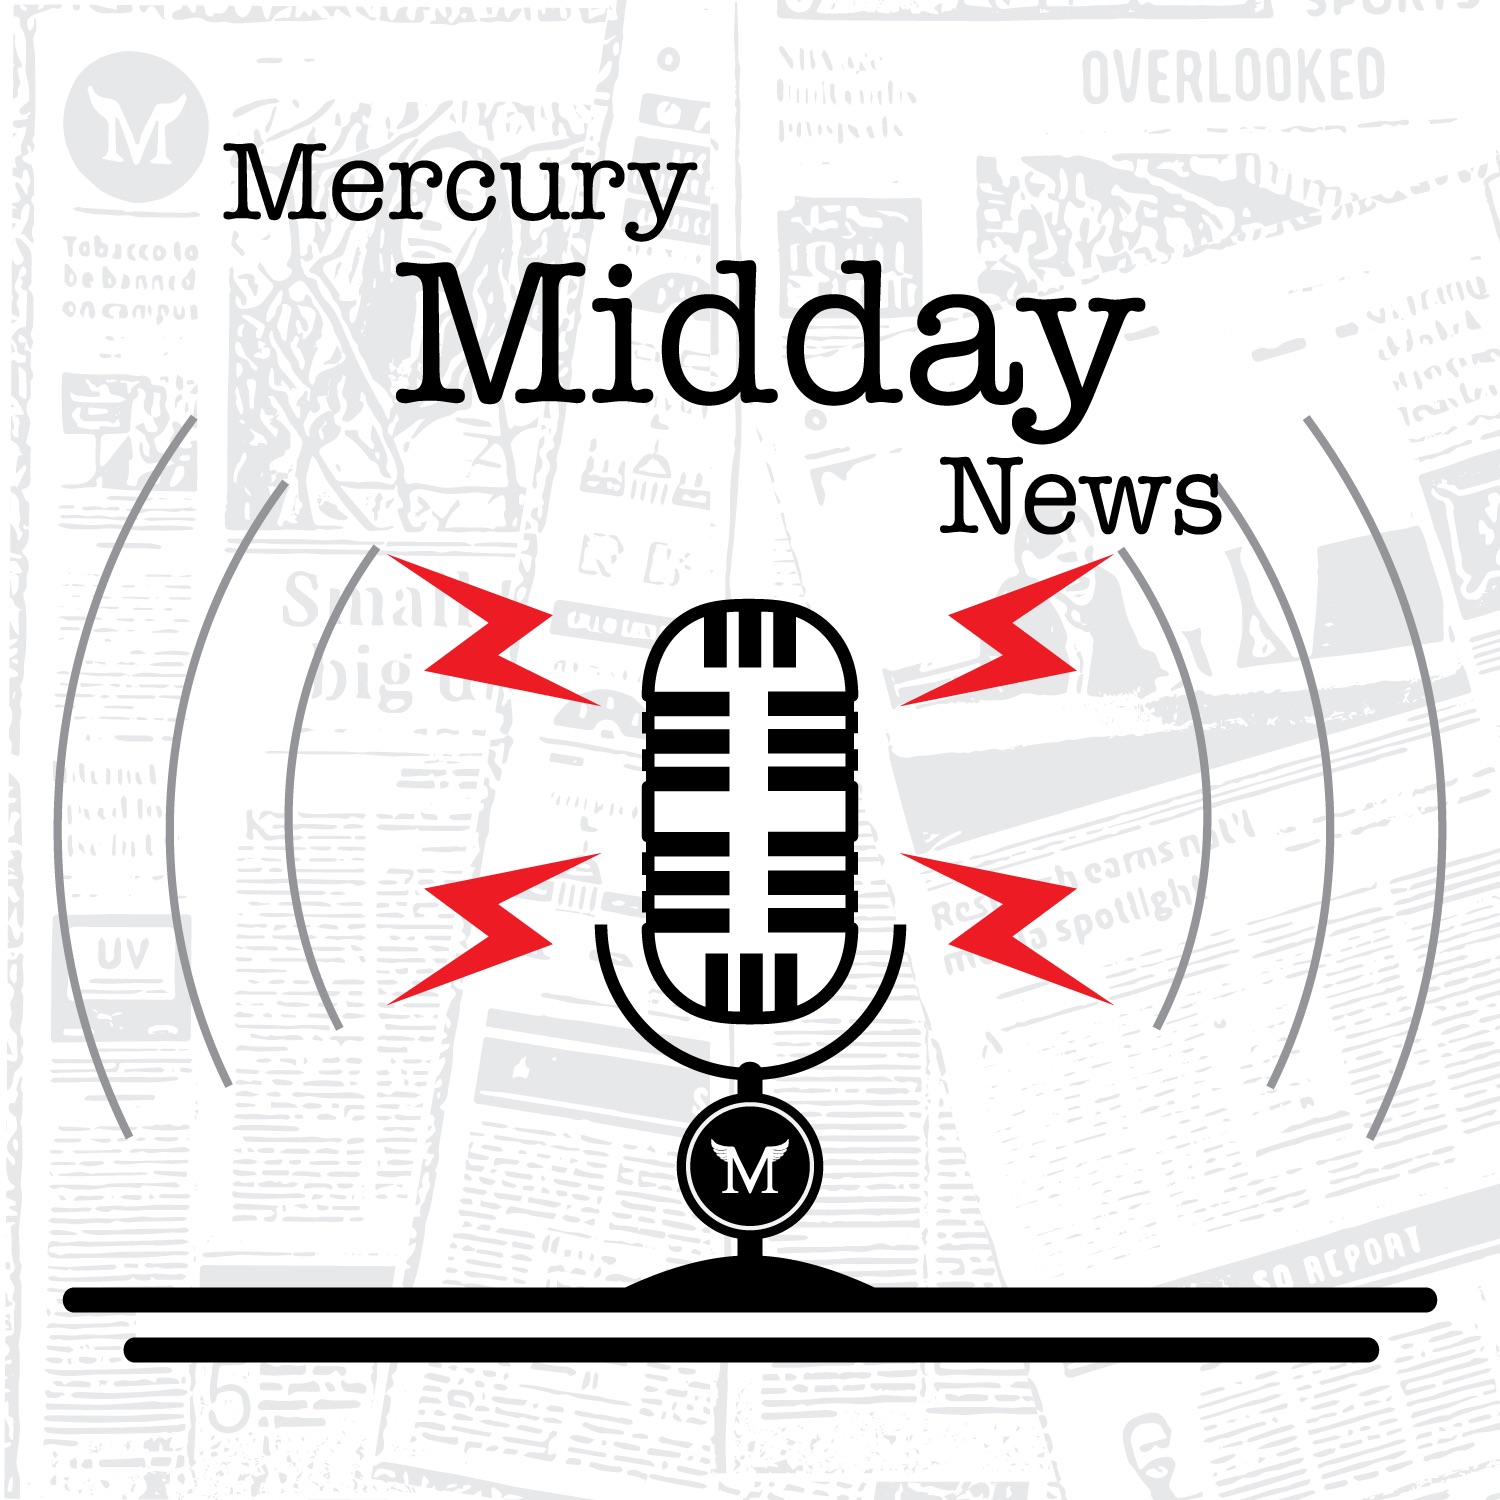 Mercury Midday News 4/20/17